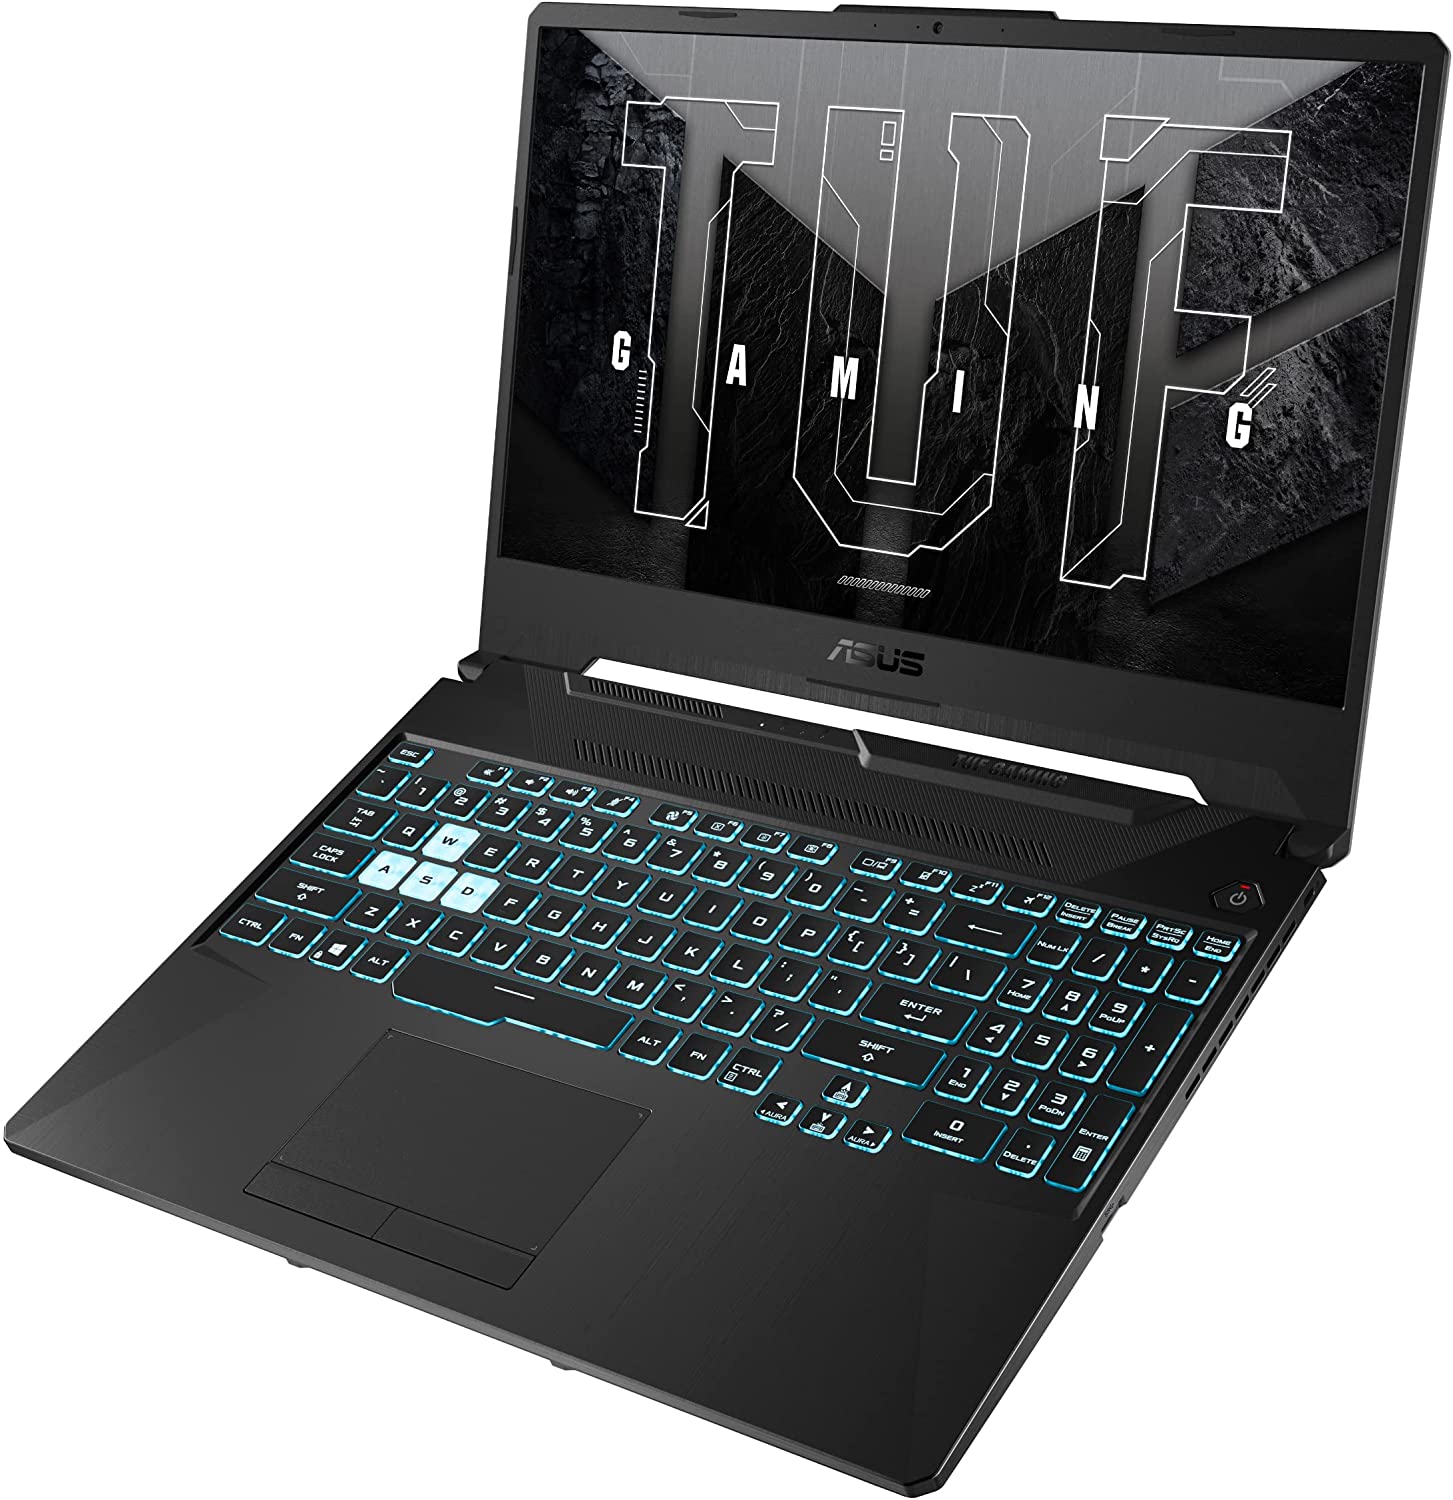 ASUS TUF Gaming F15 Gaming Laptop, 15.6” 144Hz FHD IPS-Type Display, Intel Core i5-10300H Processor, GeForce GTX 1650, 8GB DDR4 RAM, 512GB PCIe SSD, Wi-Fi 6, Windows 10